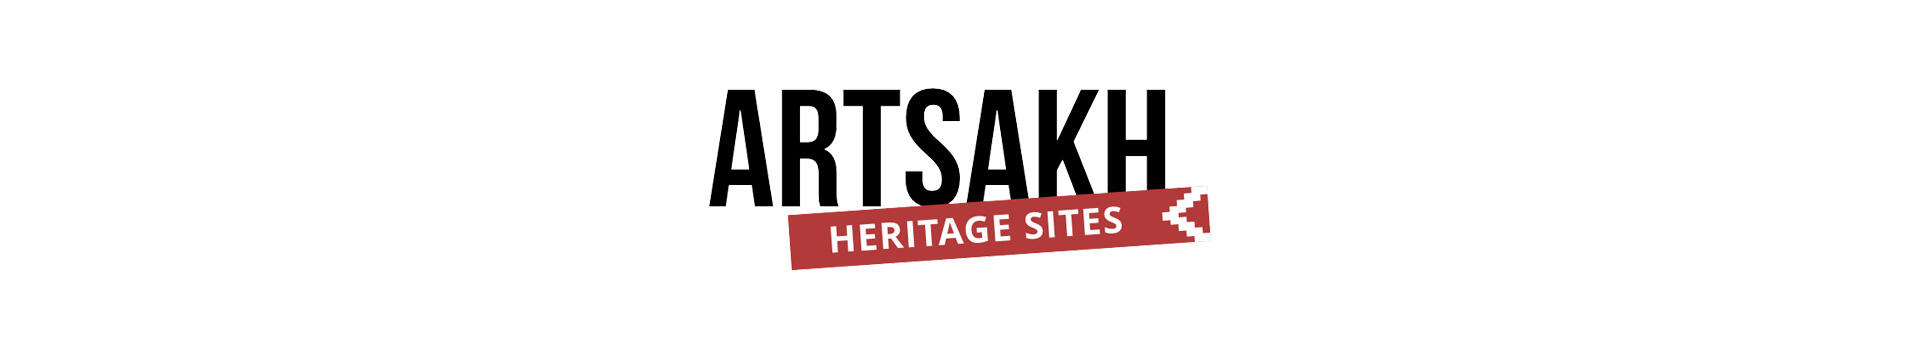 Artsakh Heritage Sites Logo